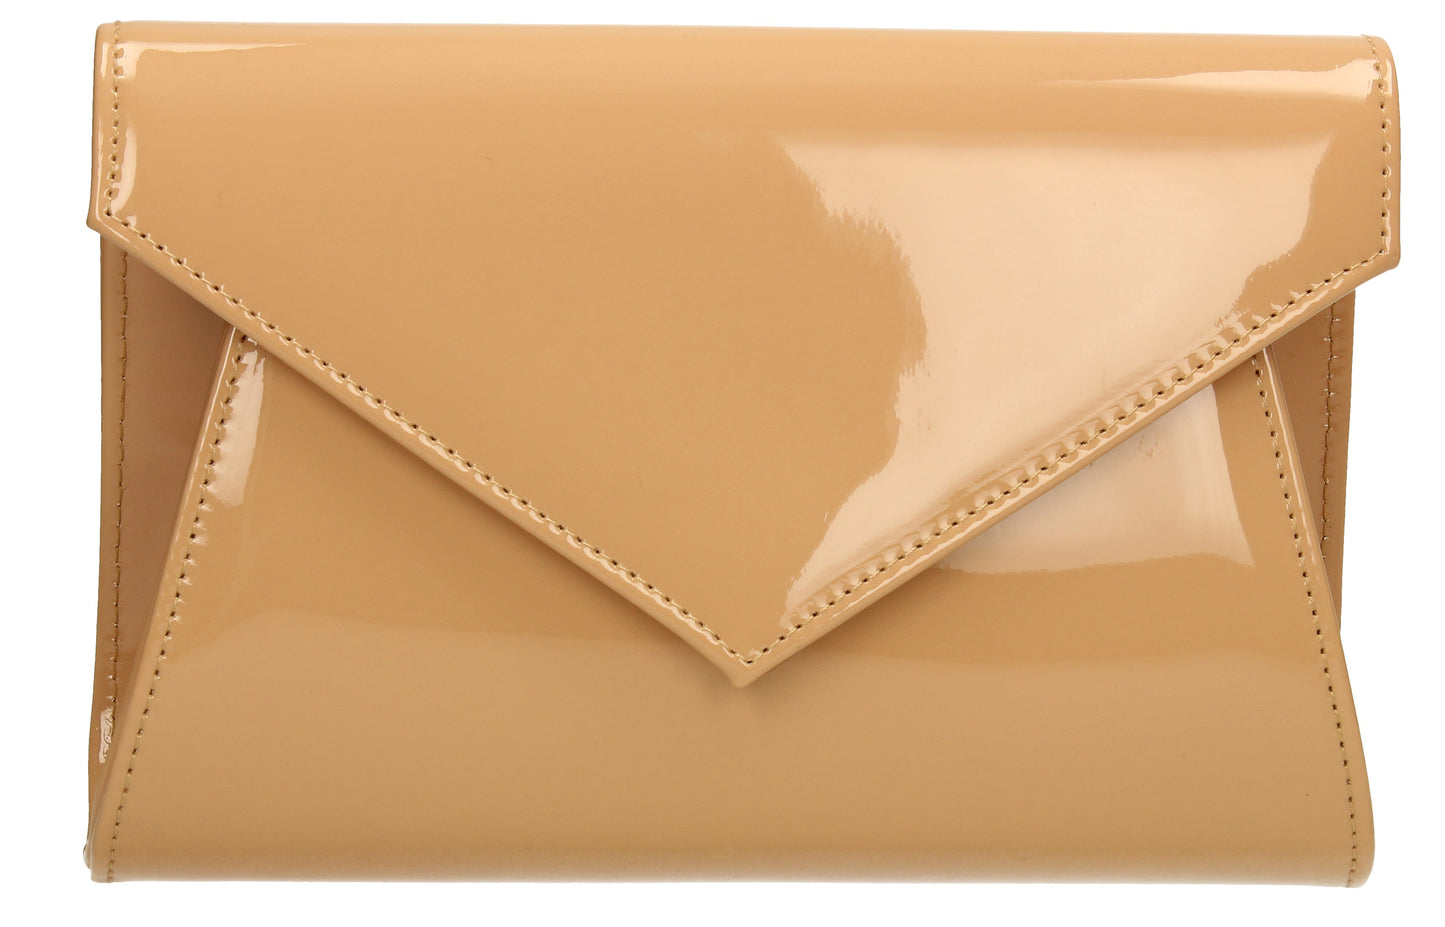 SWANKYSWANS Chrissy Envelope Clutch Bag Beige Cute Cheap Clutch Bag For Weddings School and Work